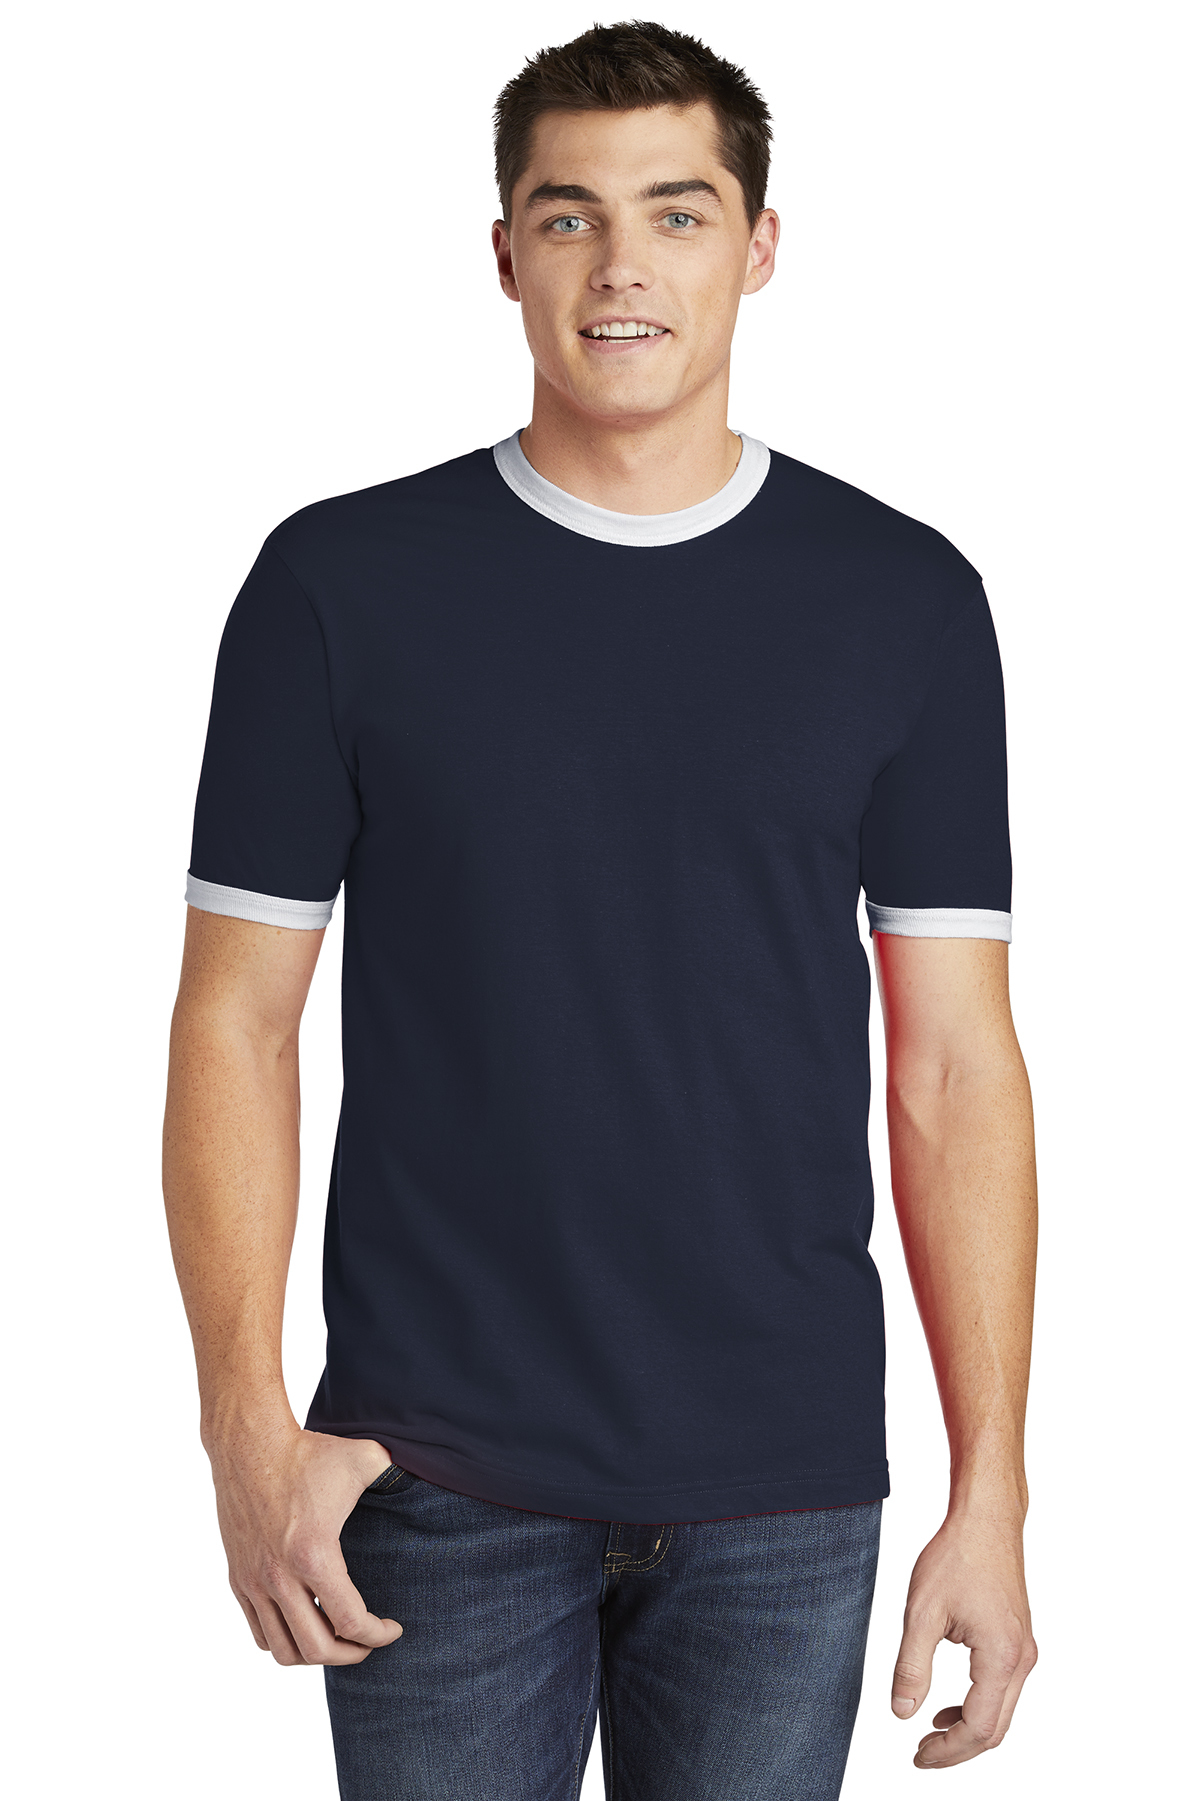 American Apparel Unisex Contrast 3/4 Length Sleeve T-Shirt 